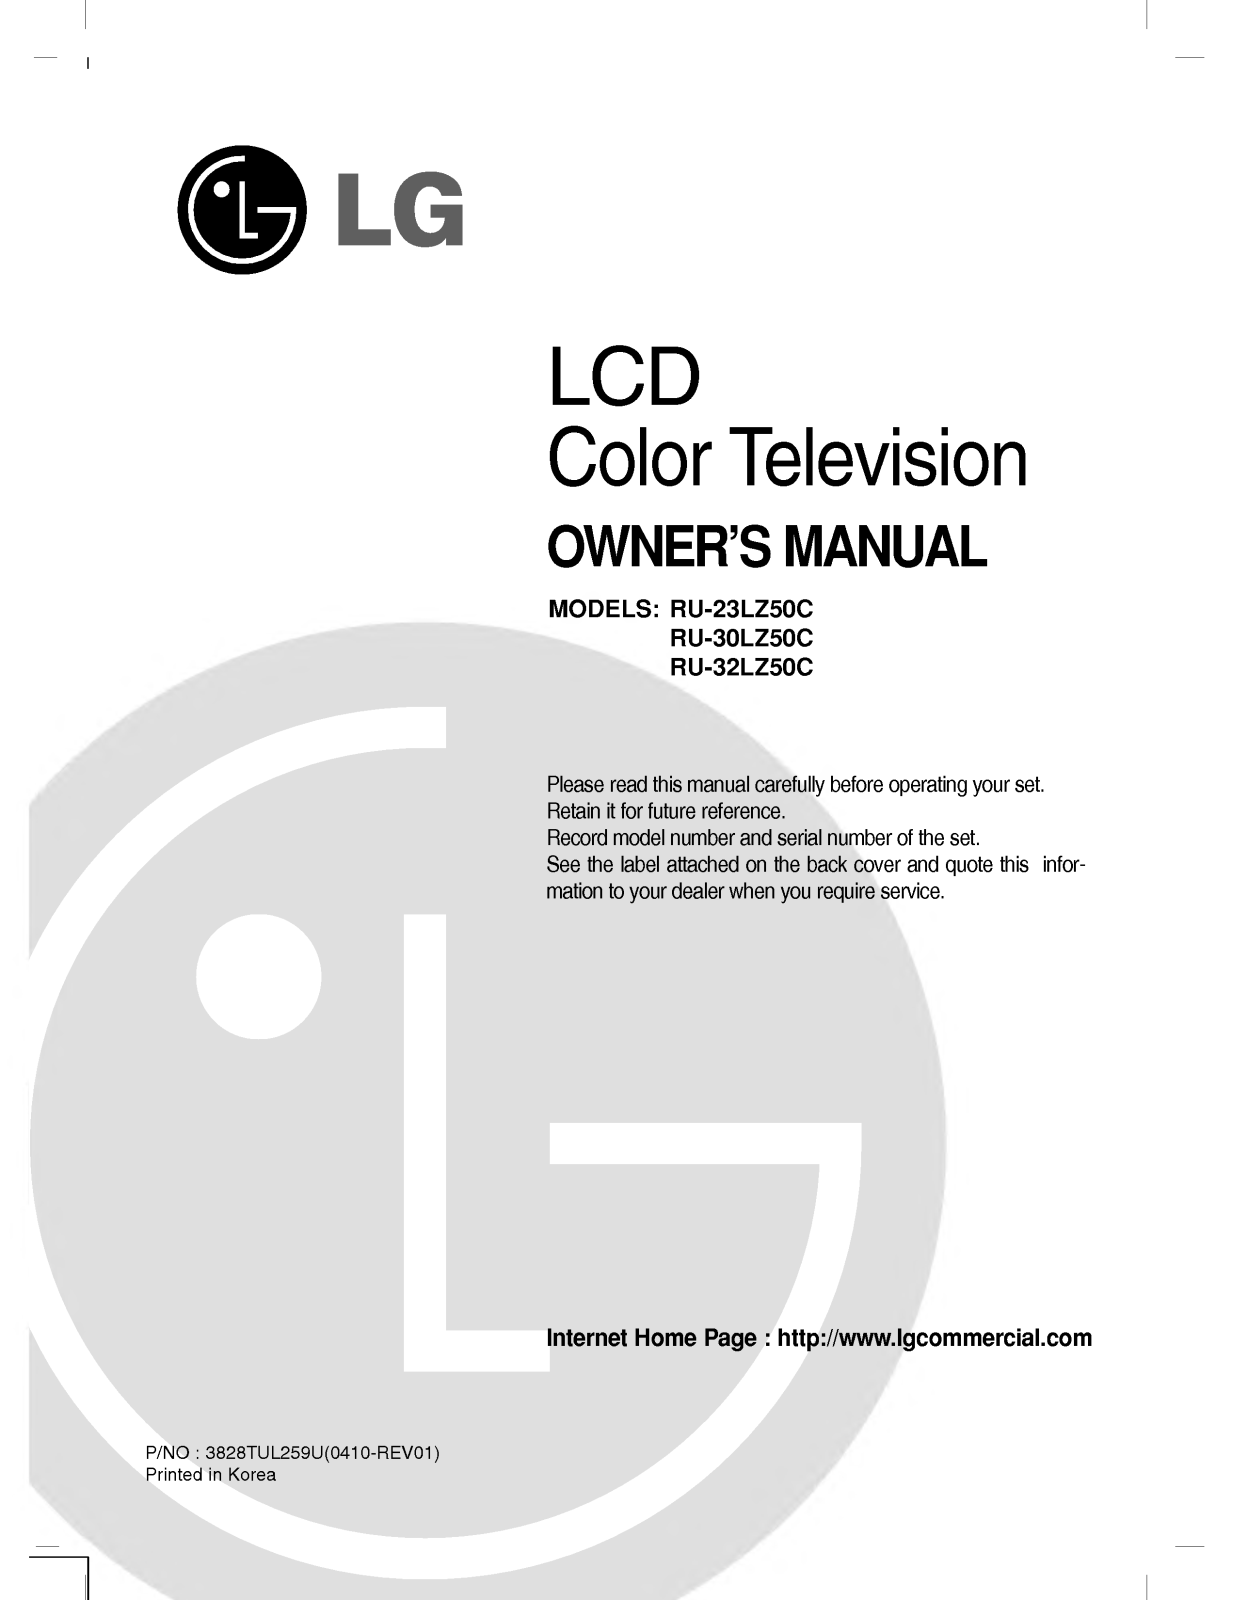 LG RM-23LZ50C User Manual